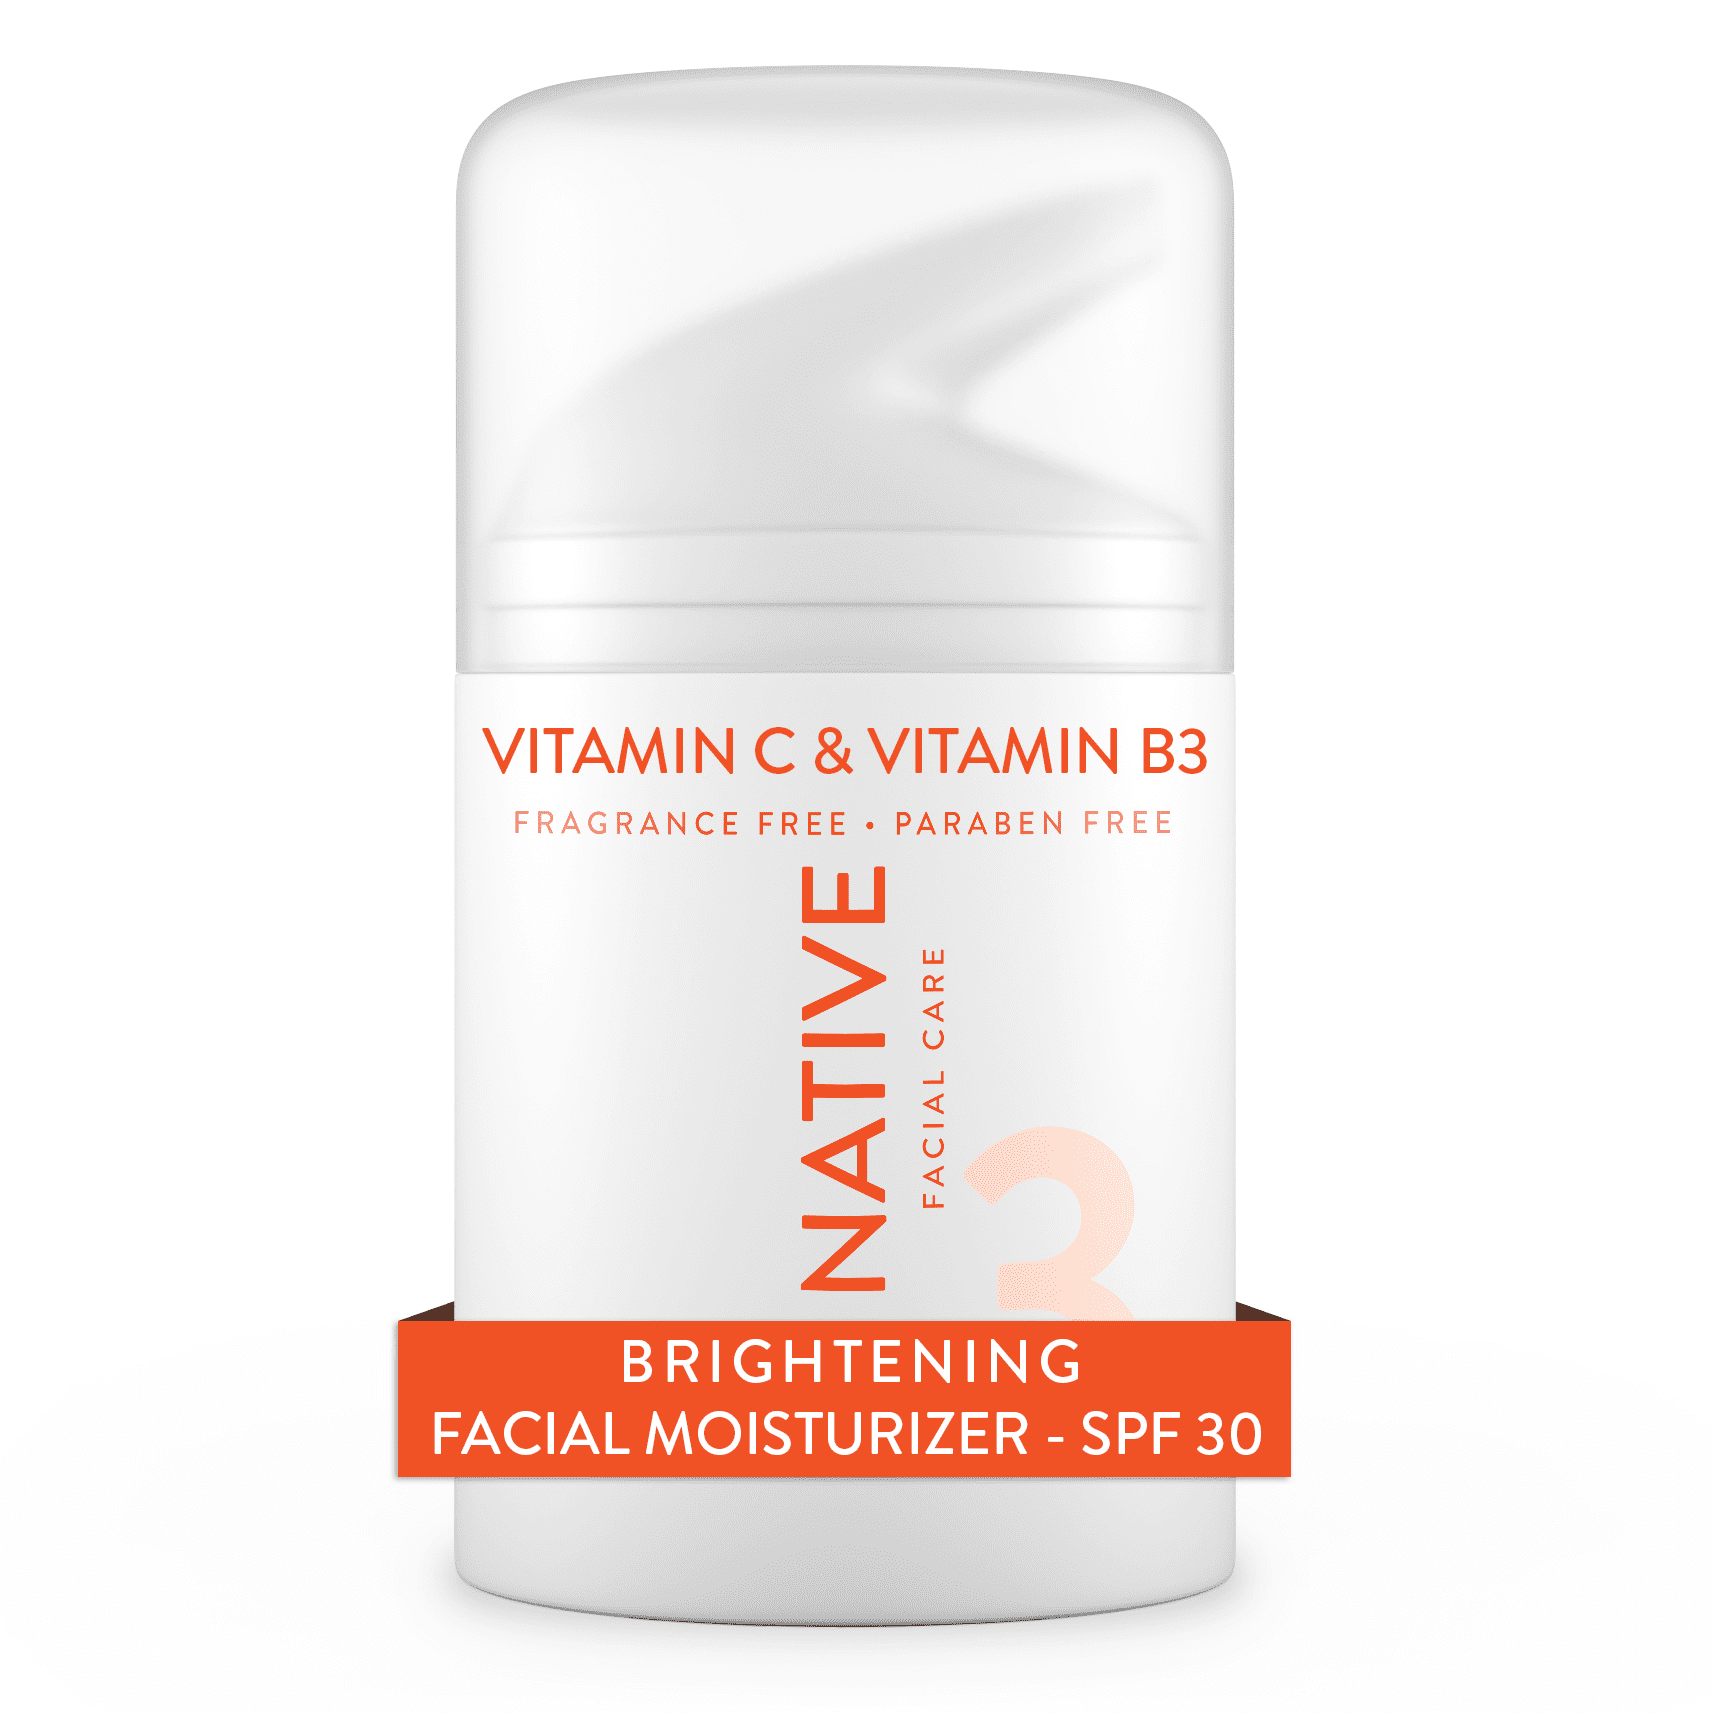 Native Brightening Vitamin C Face Moisturizer, with Sunscreen SPF 30, Paraben-Free, 1.7 oz